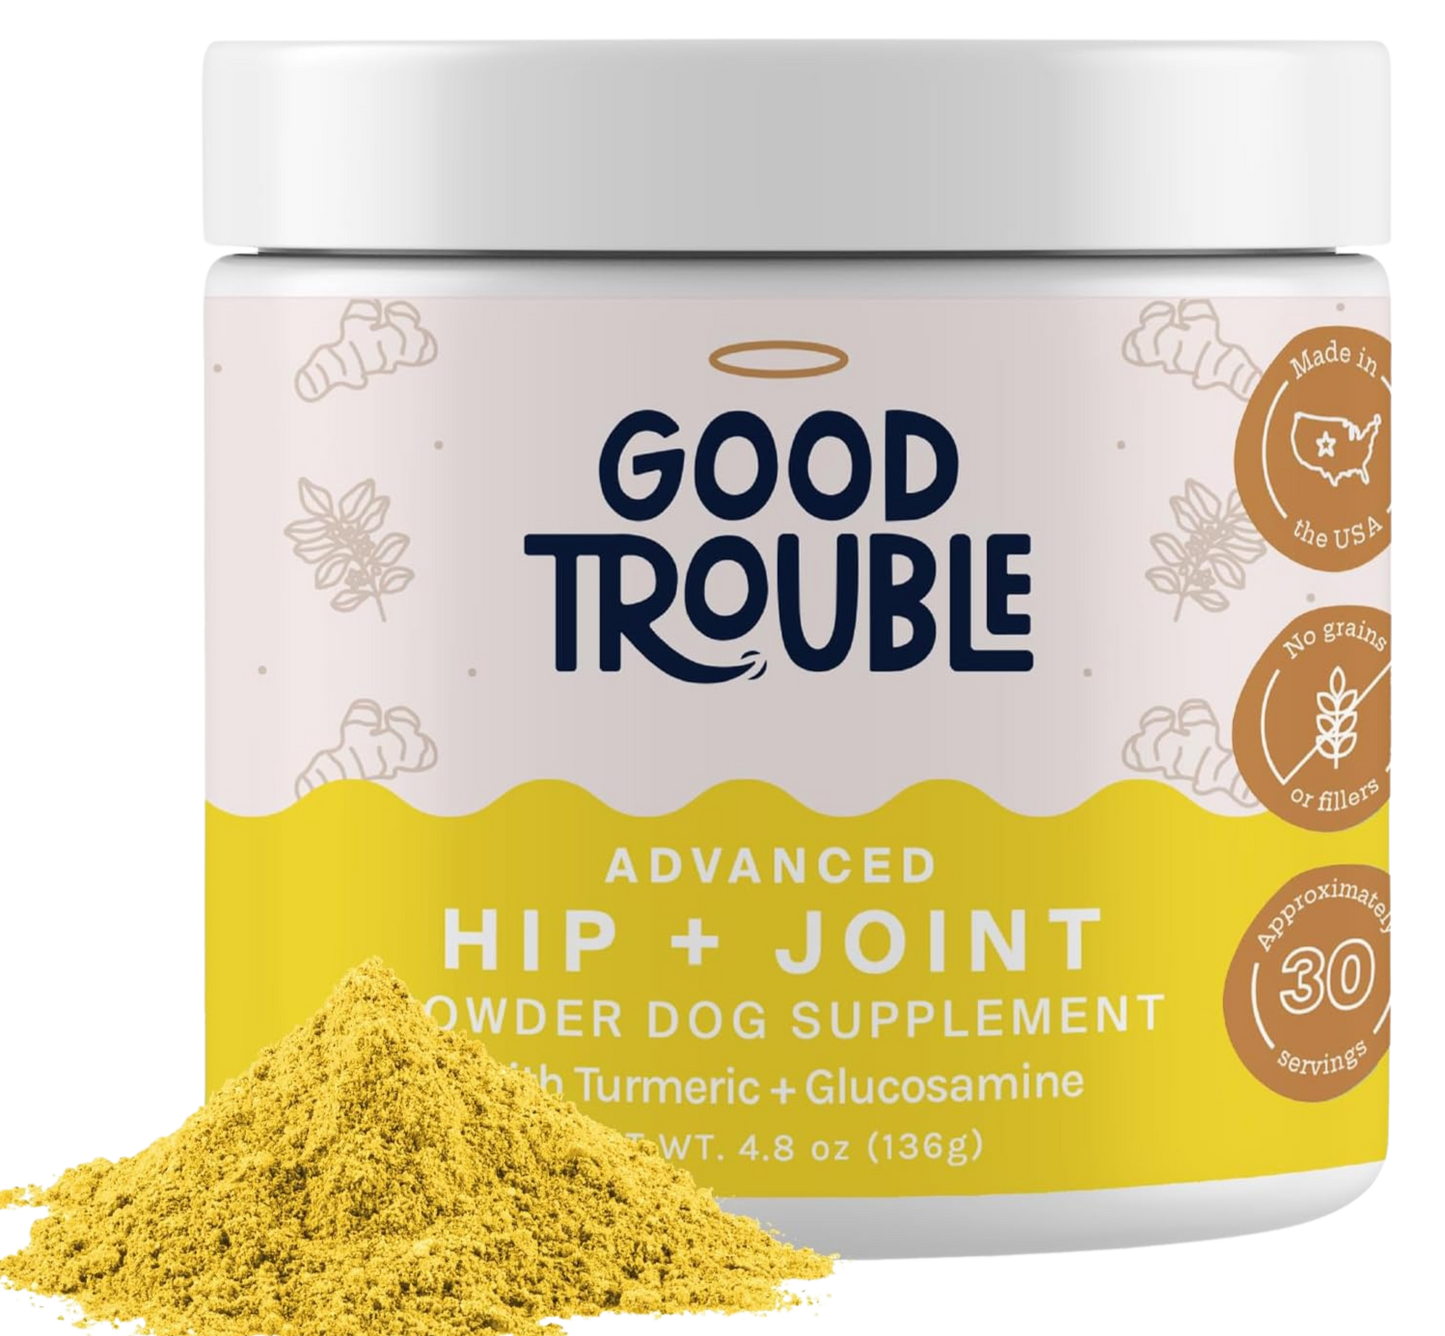 Dog Advanced Hip + Joint Powder Supplement